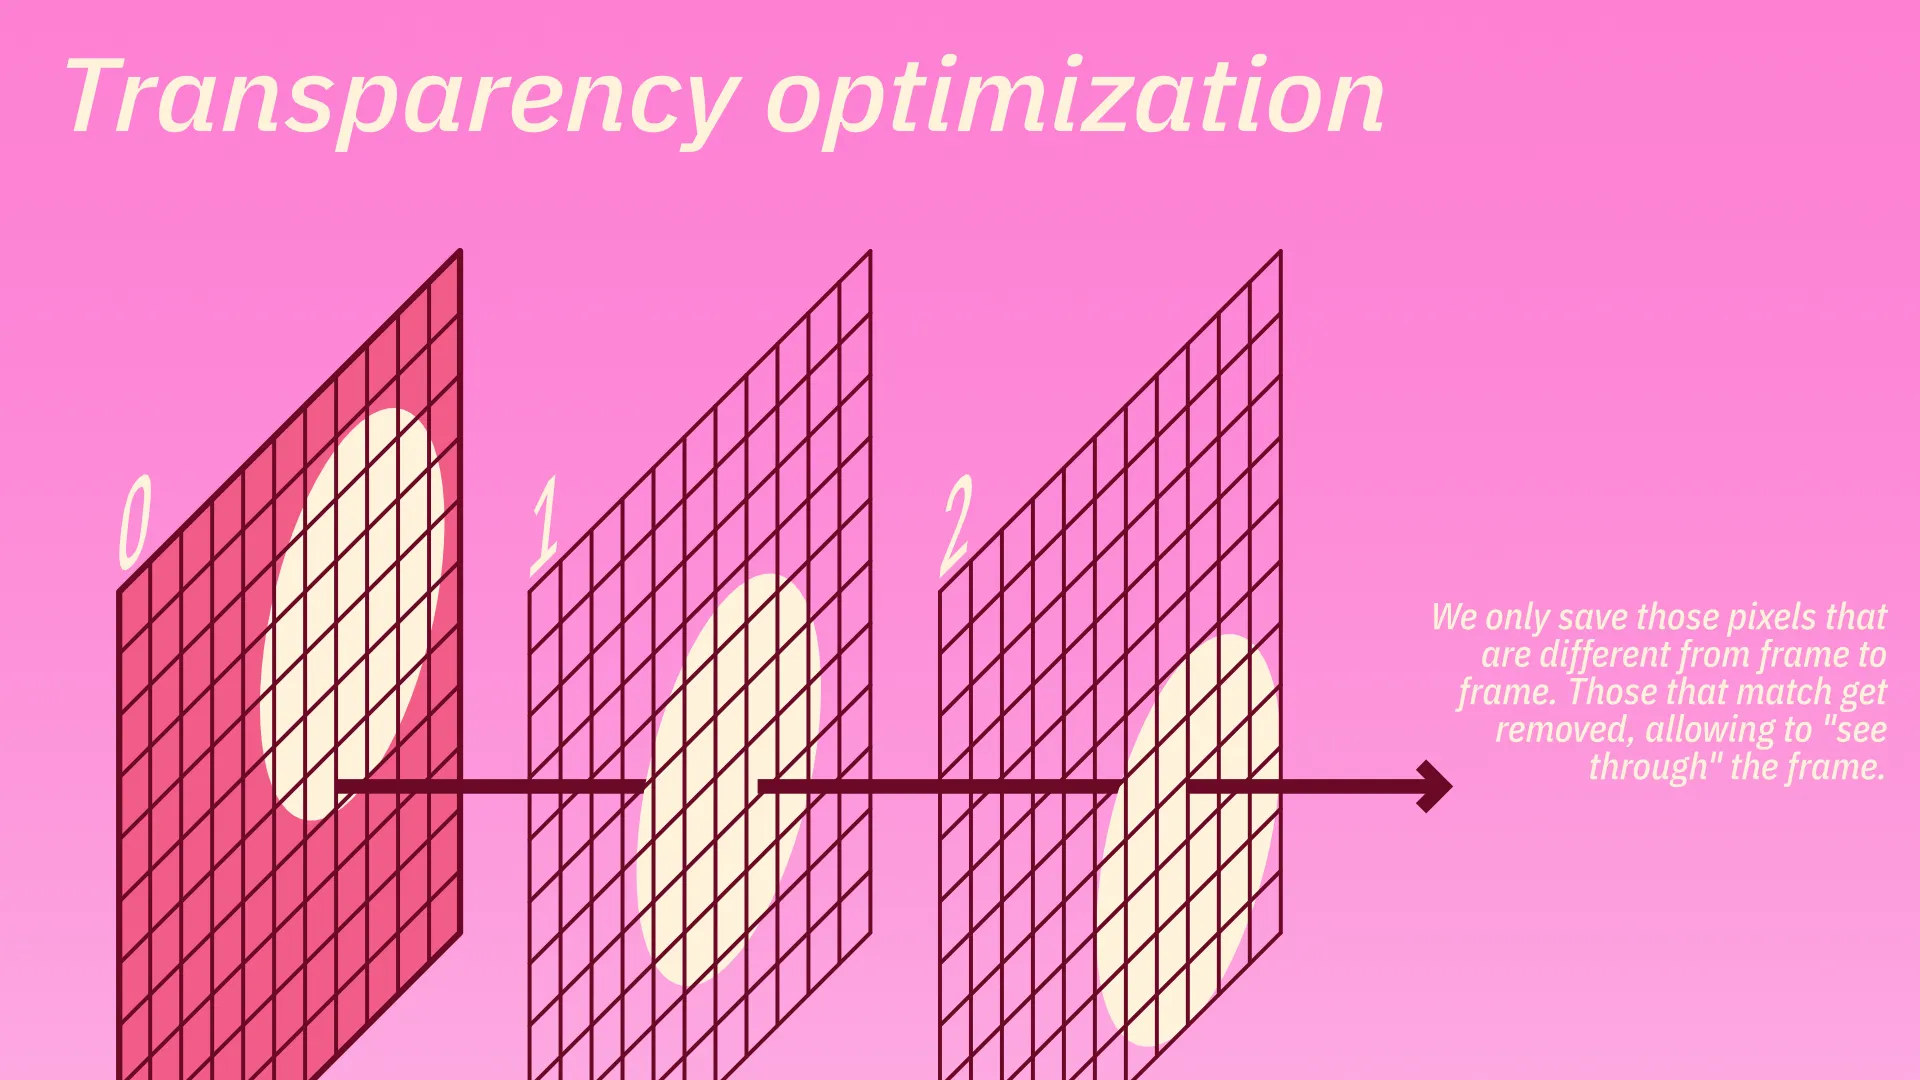 Transparency optimization